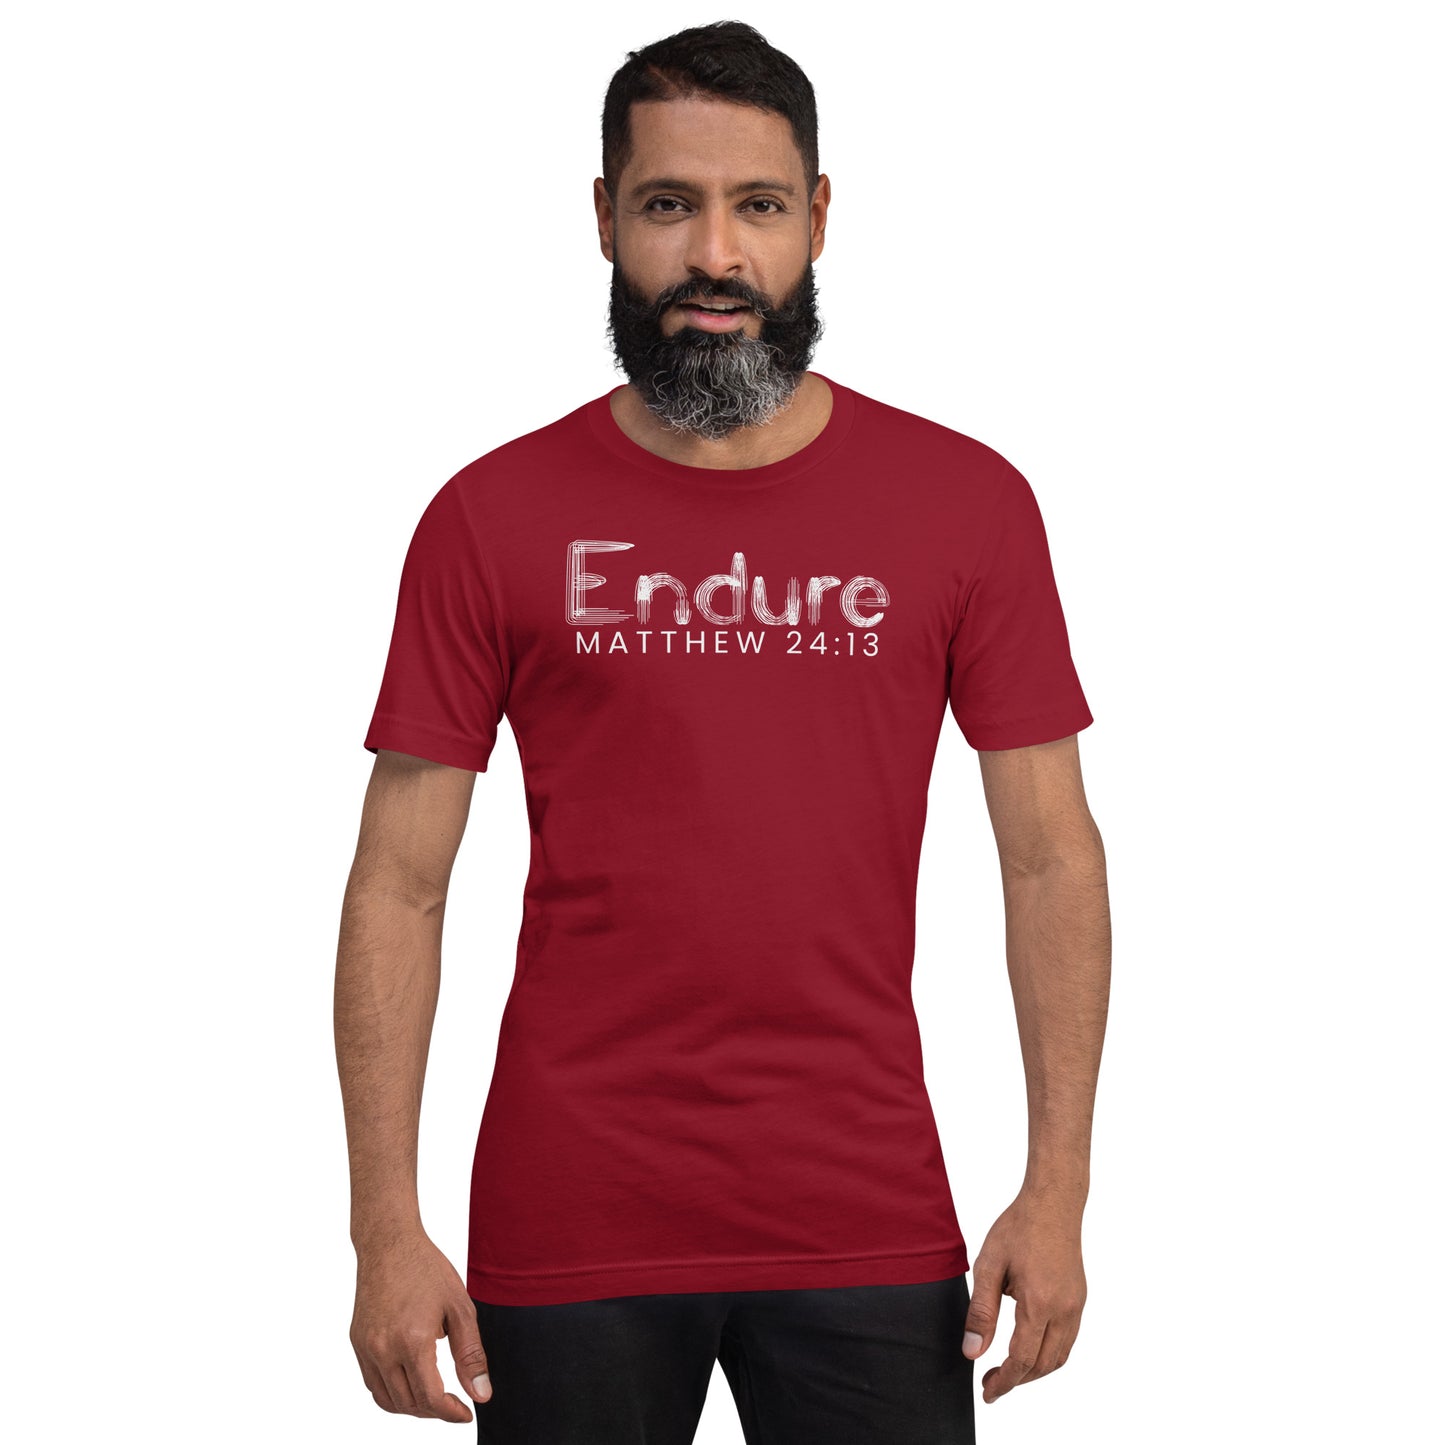 Endure t-shirt